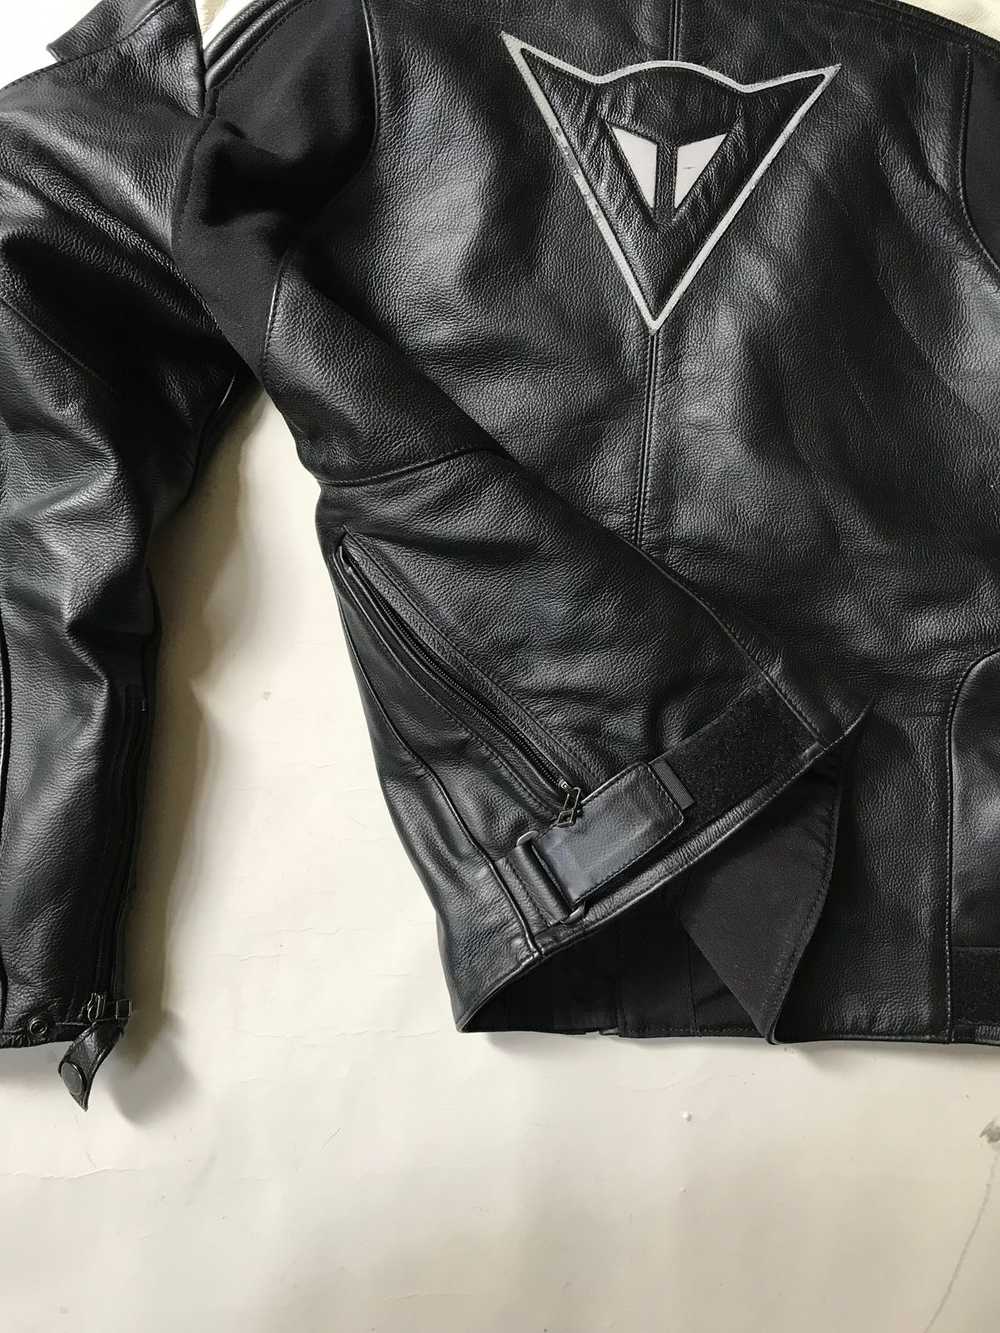 Dainese Dainese Two Tone Leather Motorcycle Jacket - image 10